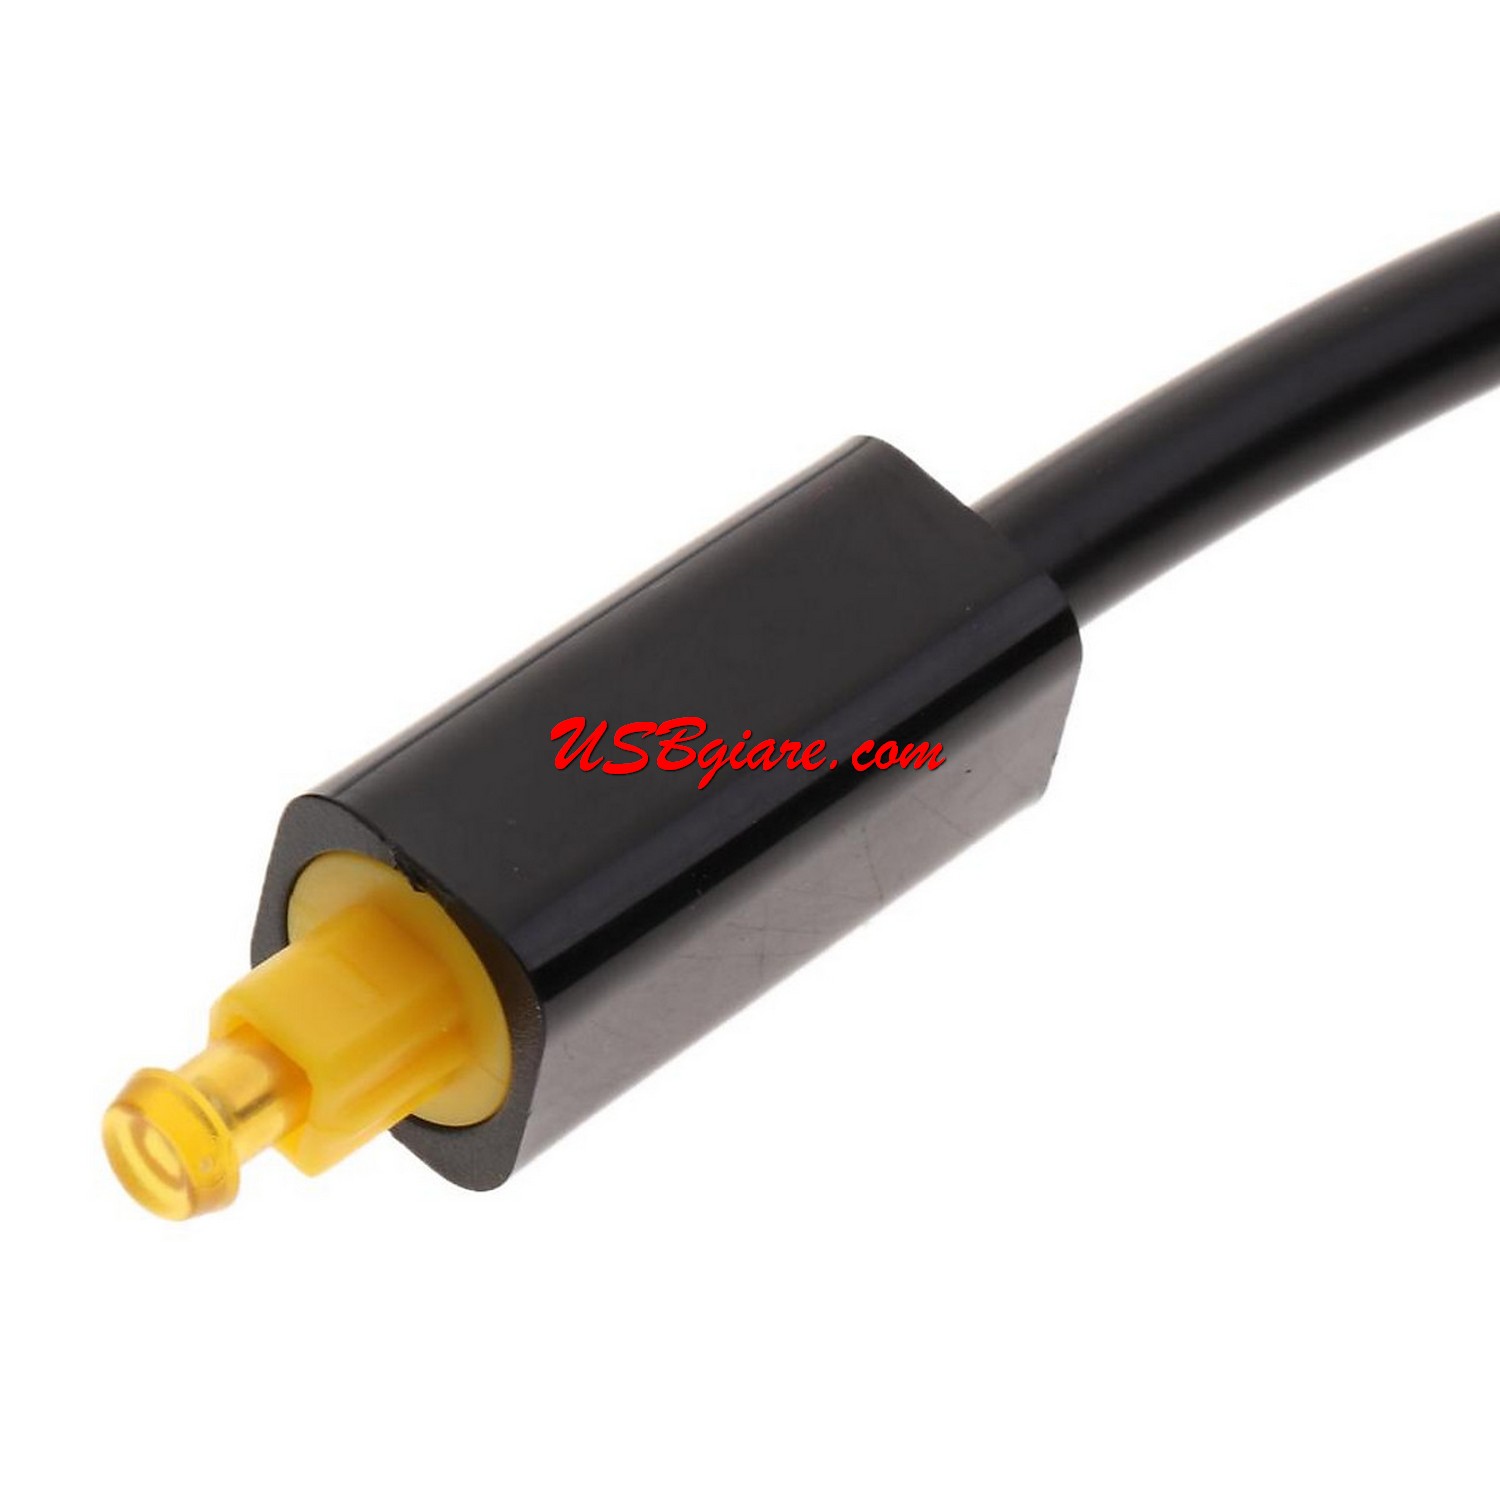 cáp optical 1 ra 2, chia optical 1 to 2, optical toslink 1 sang 2 optical Digital Toslink Optical Splitter Cable Adapter